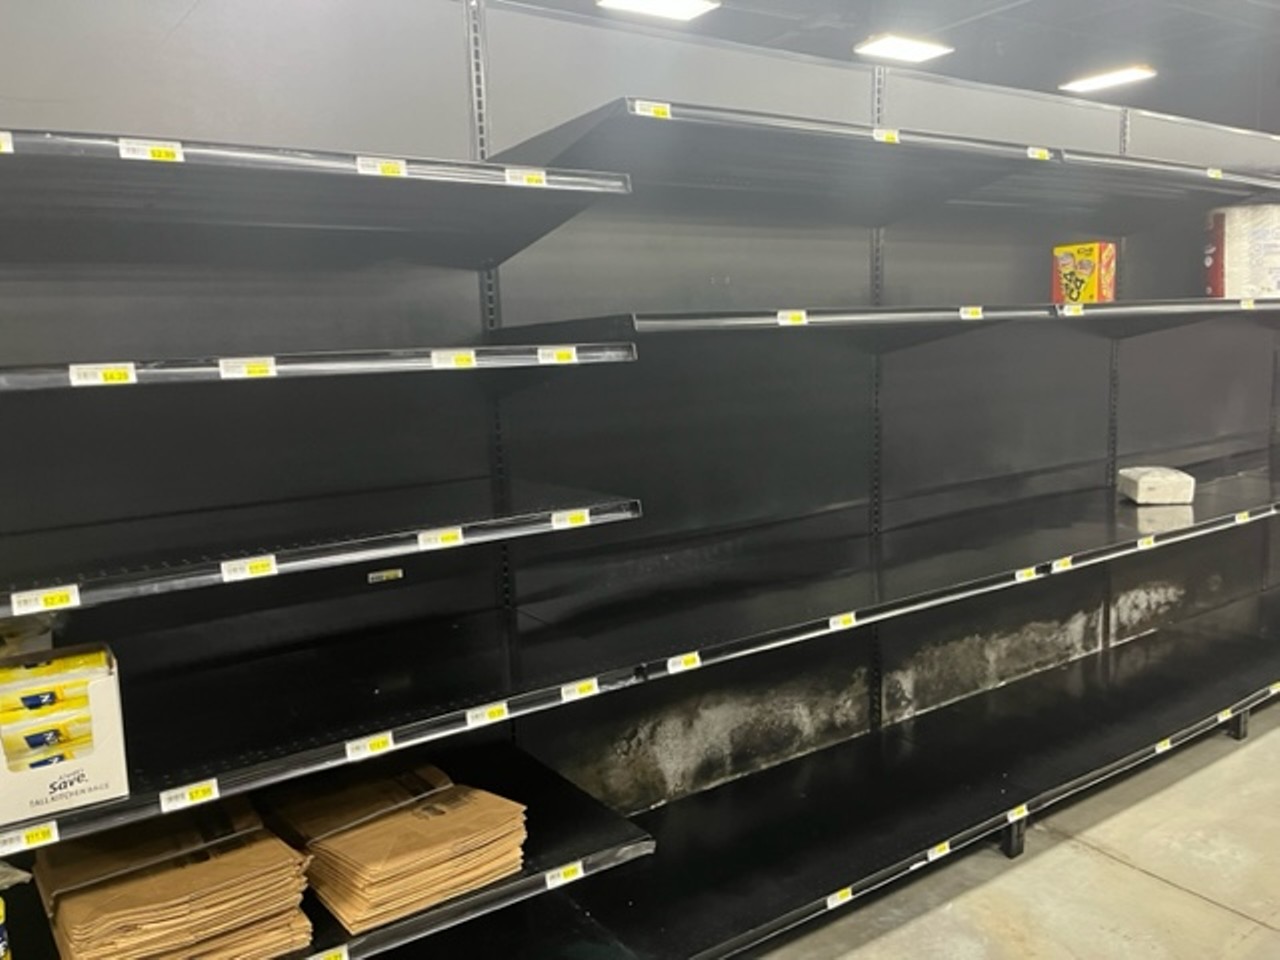 More empty shelves on Lafayette Avenue.